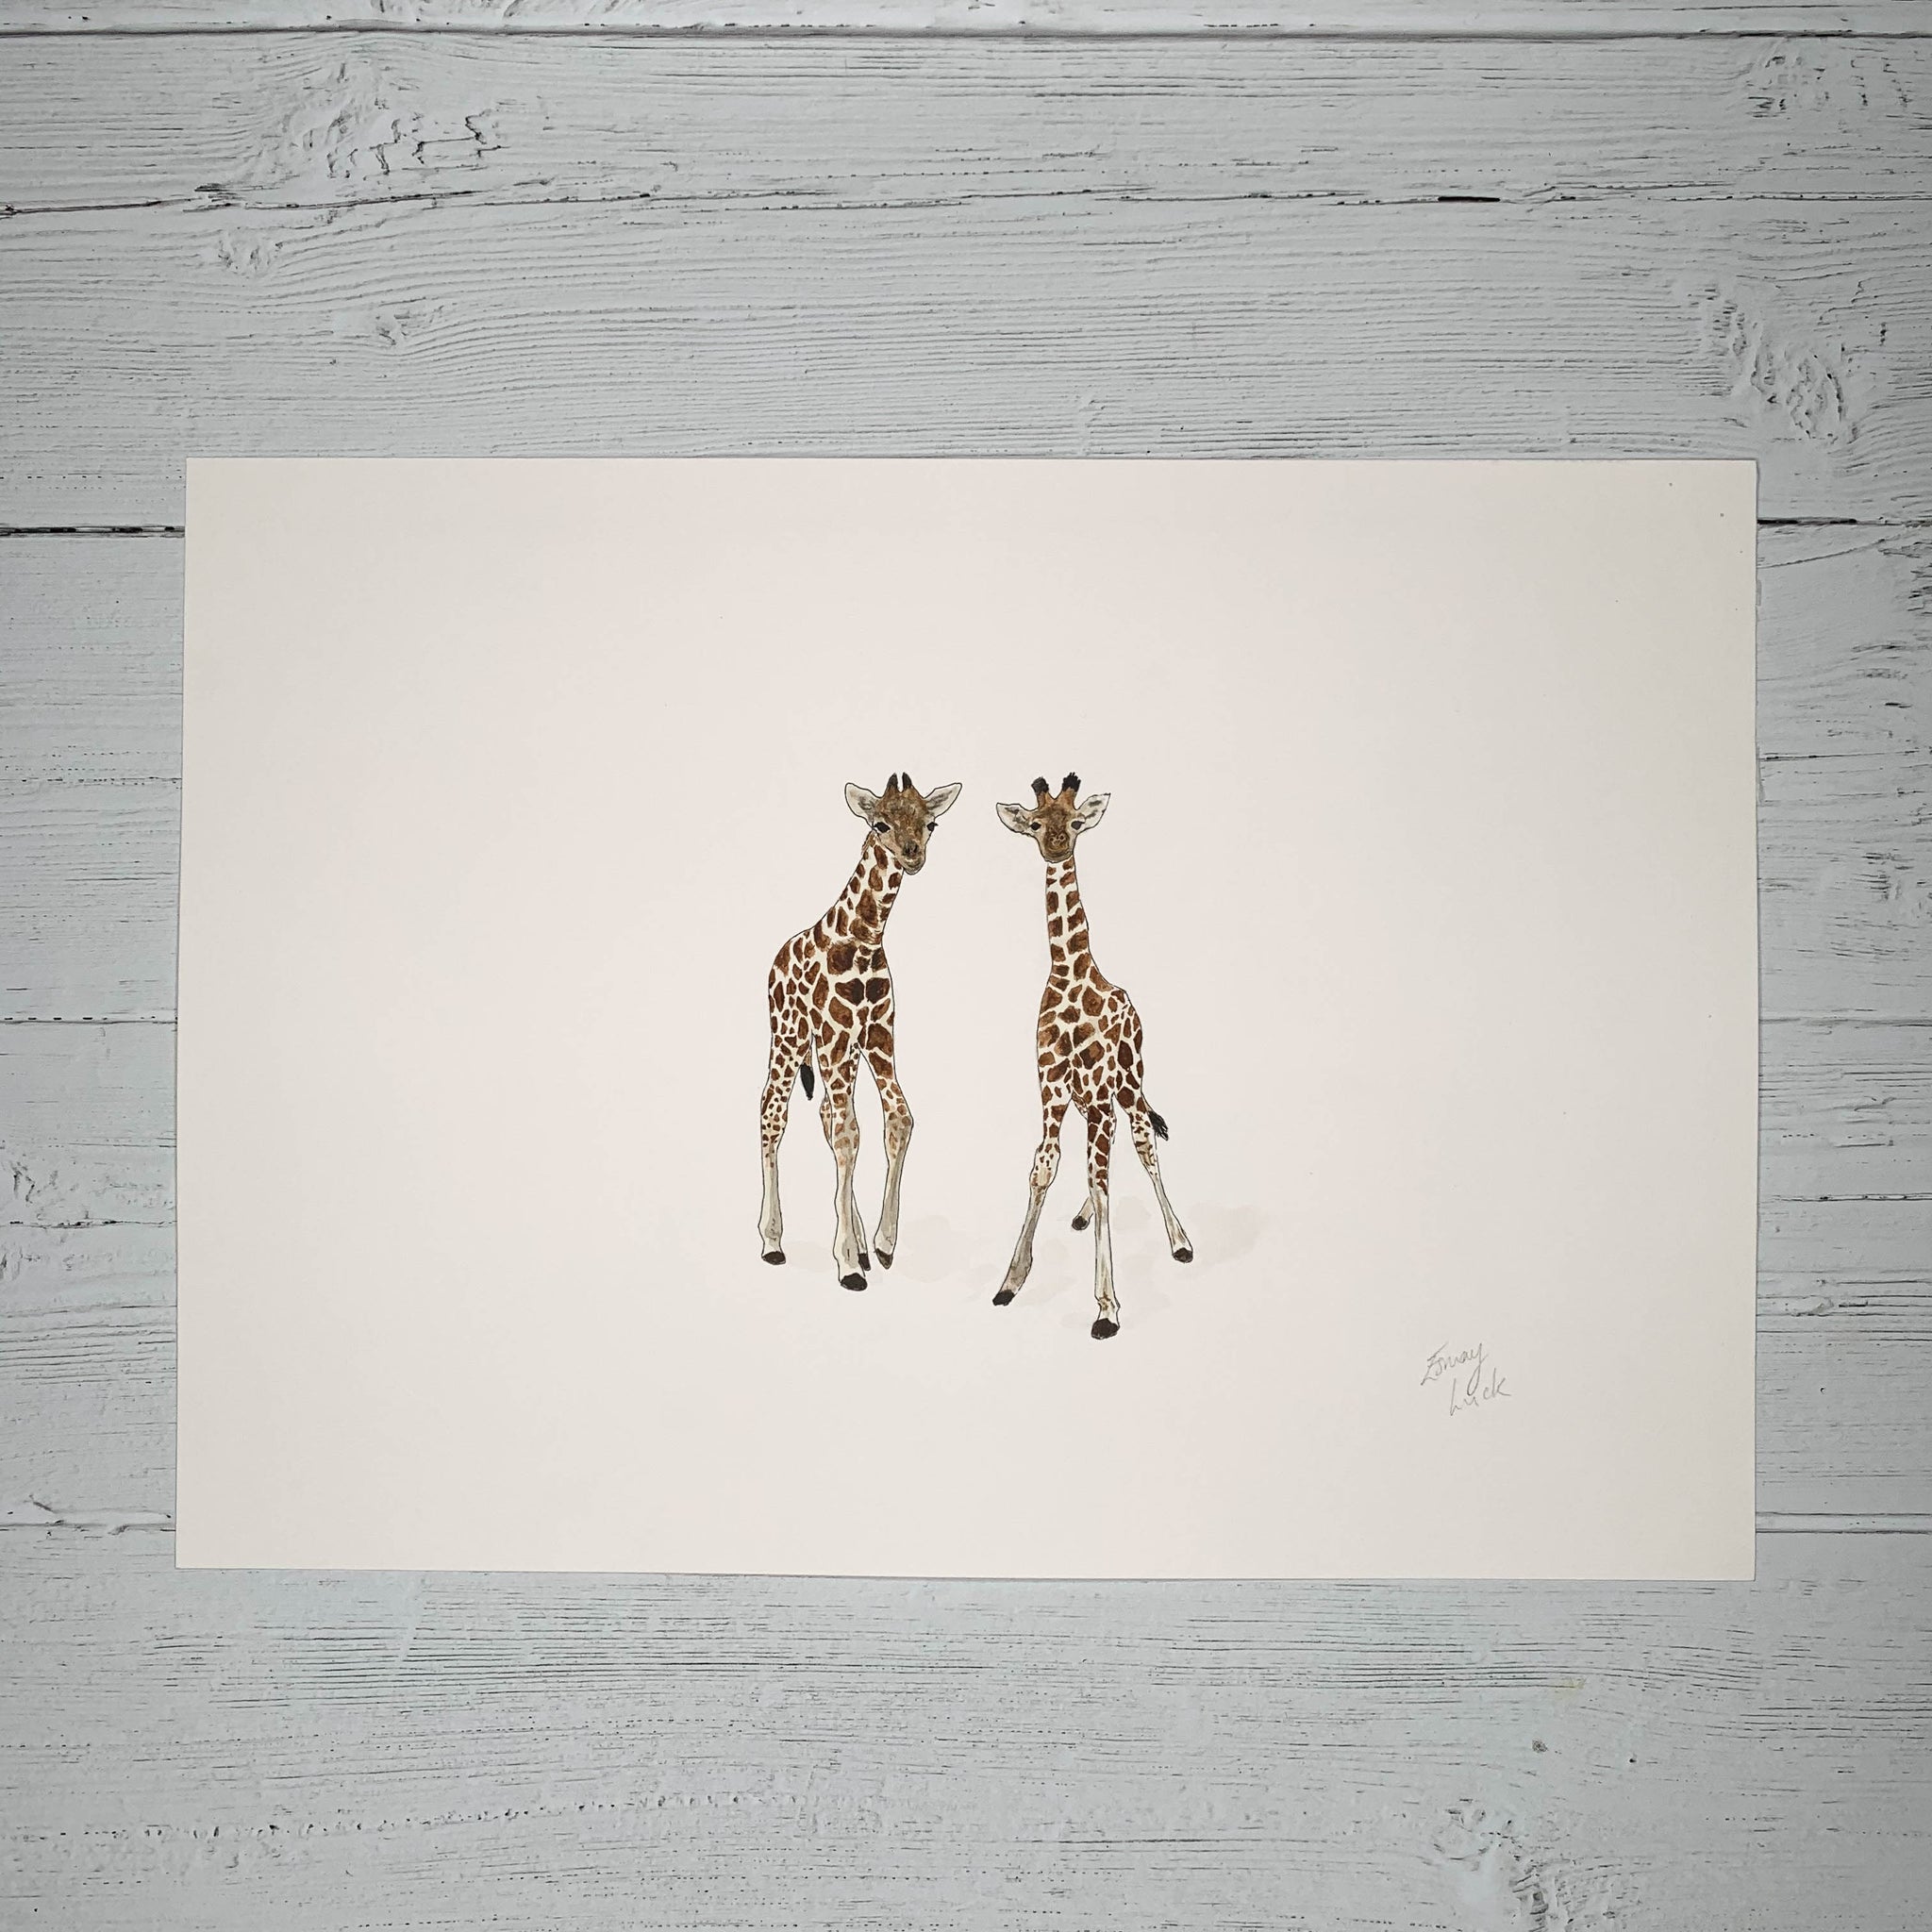 Baby Giraffes - Original (1 of 1)